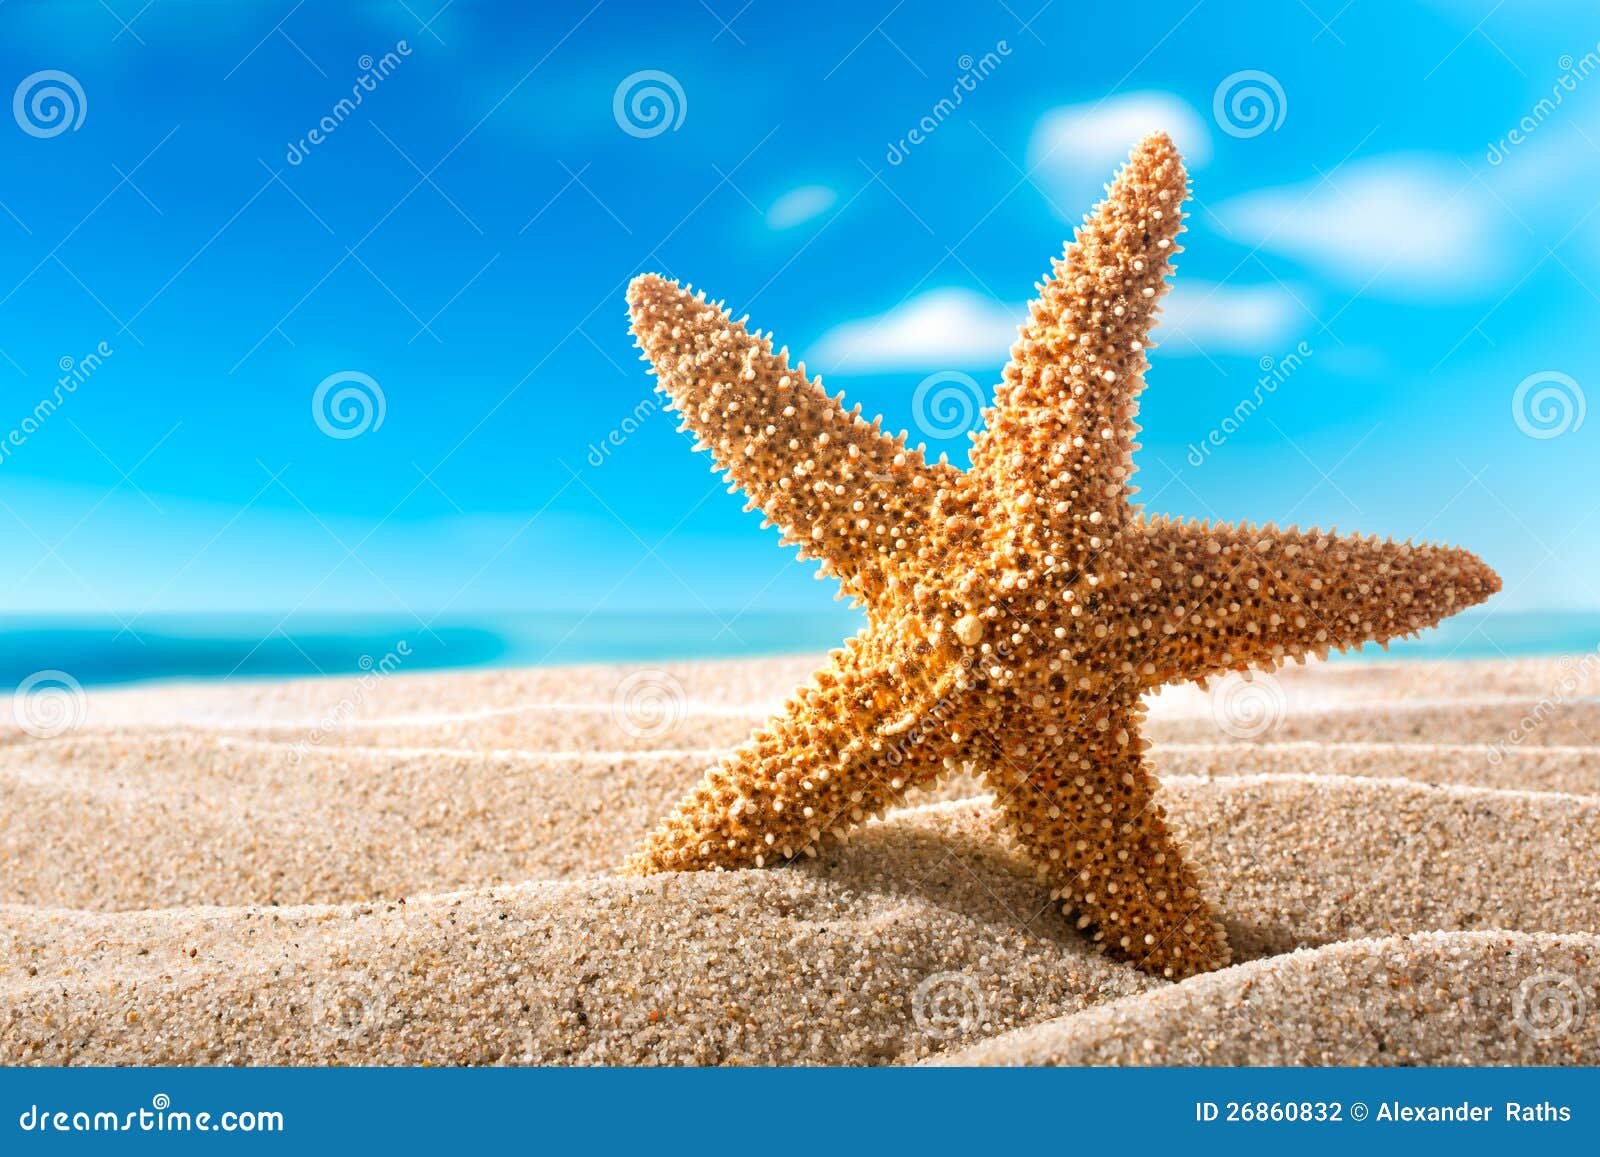 Seestern im Sand starfish on the beach Ansichtskarte